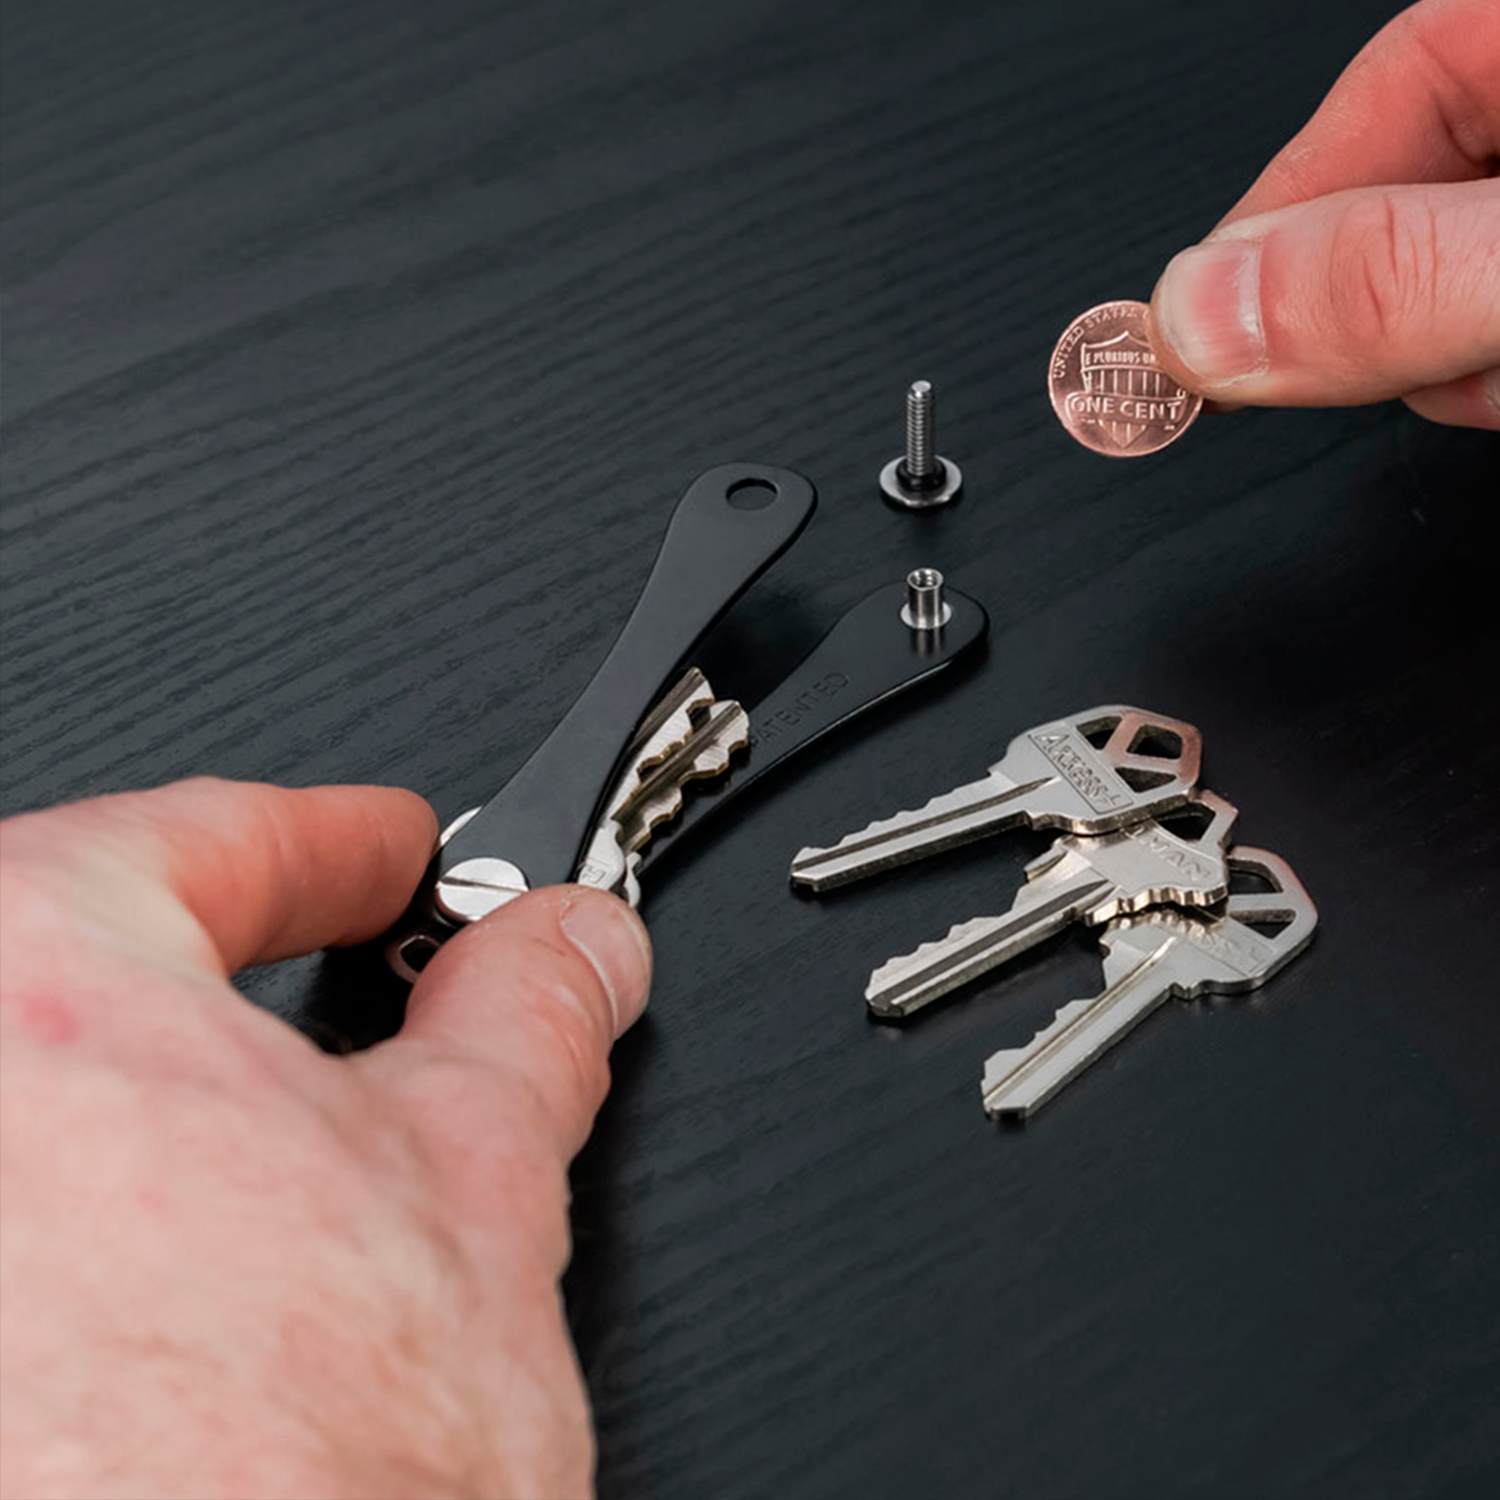 Smart Compact Key Organizer Keychain - Black